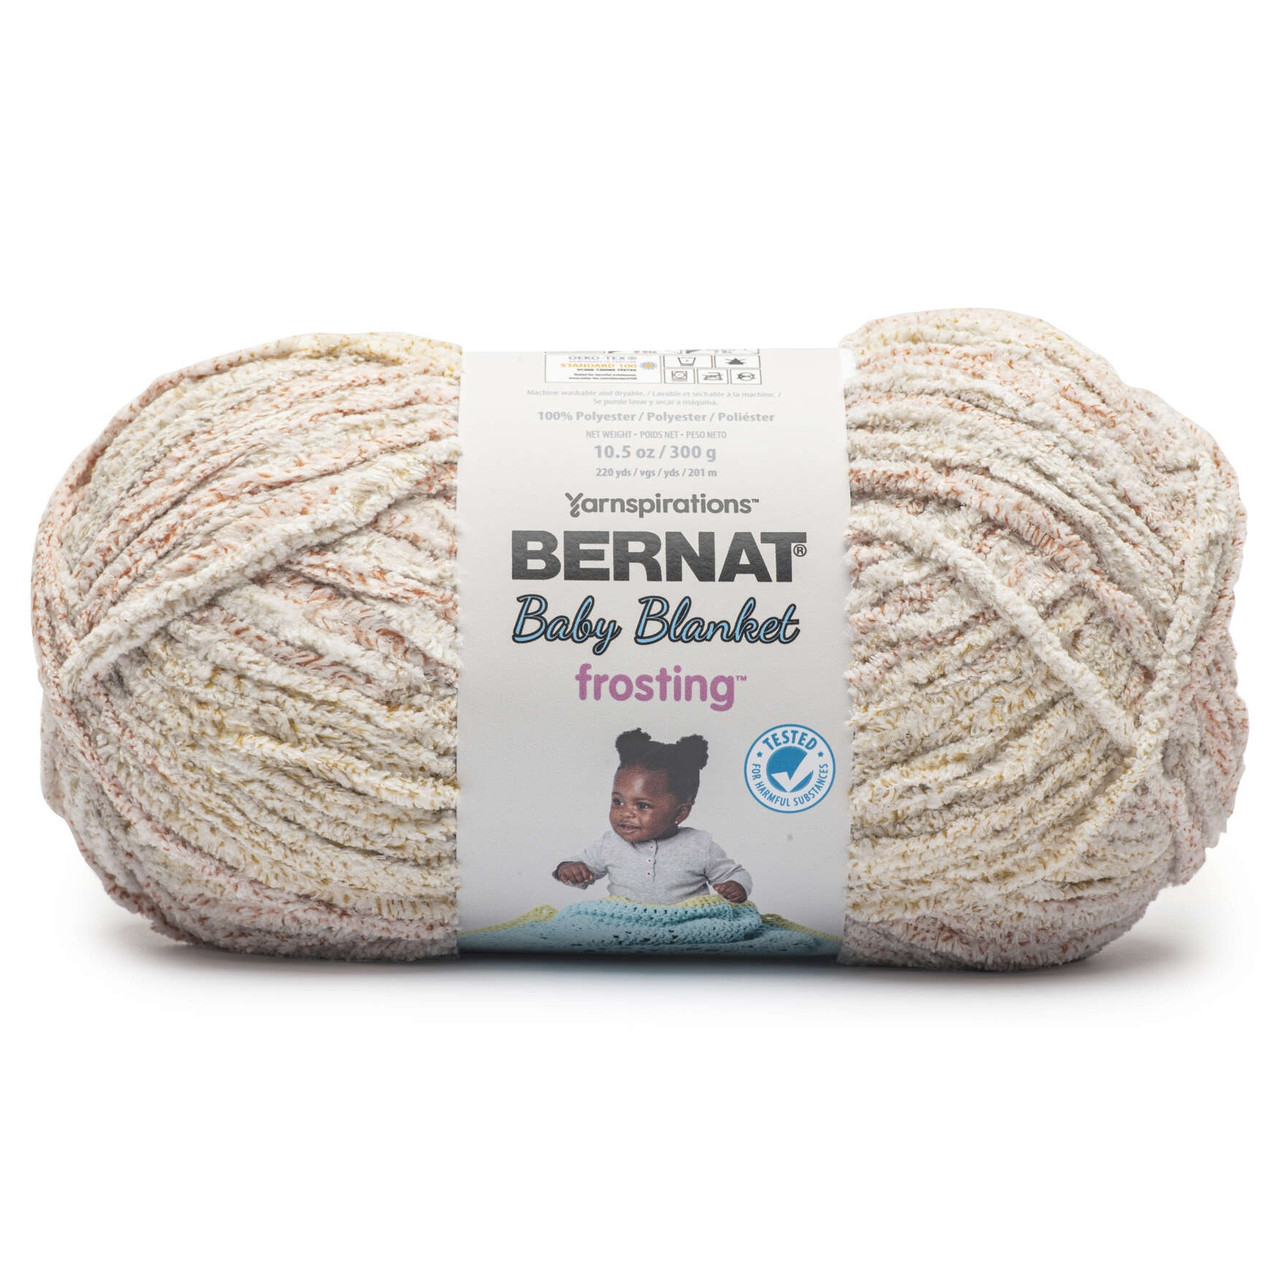 Baby Blanket Yarn by Bernat, Machine Wash & Dry Blanket Yarn